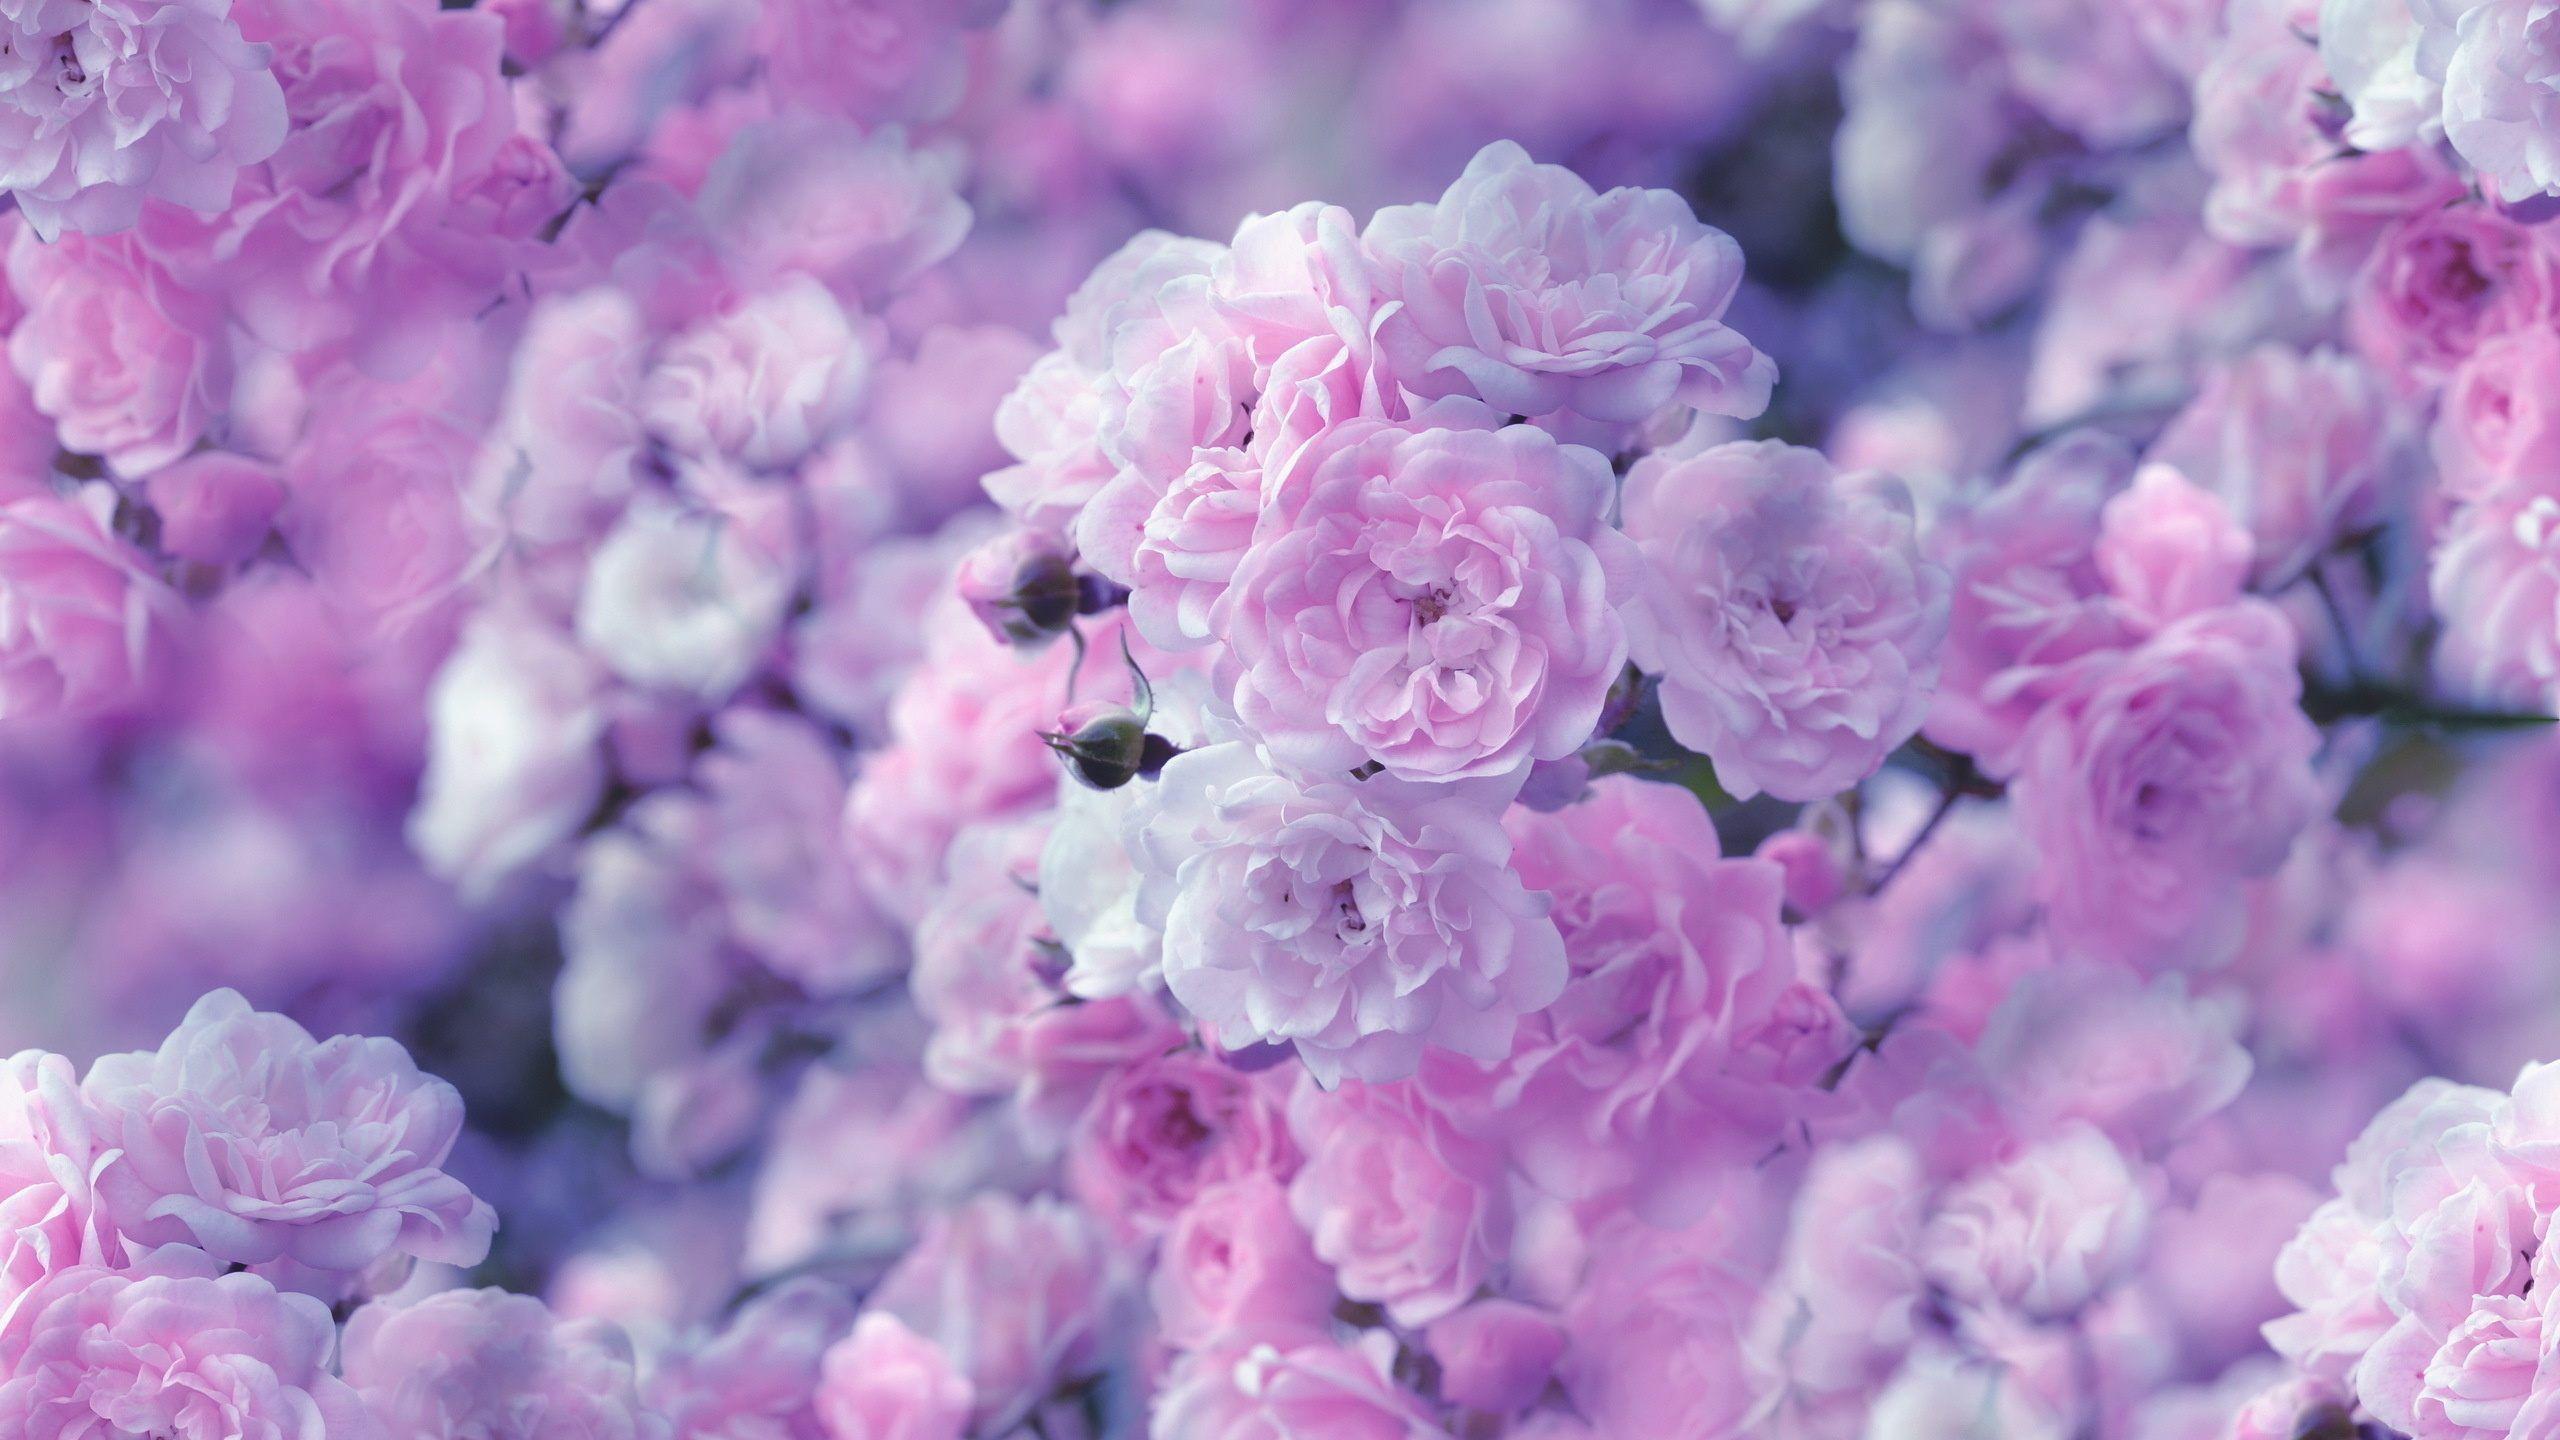 Roses Pink Flowers Wallpaper HD Free Download For Desktop